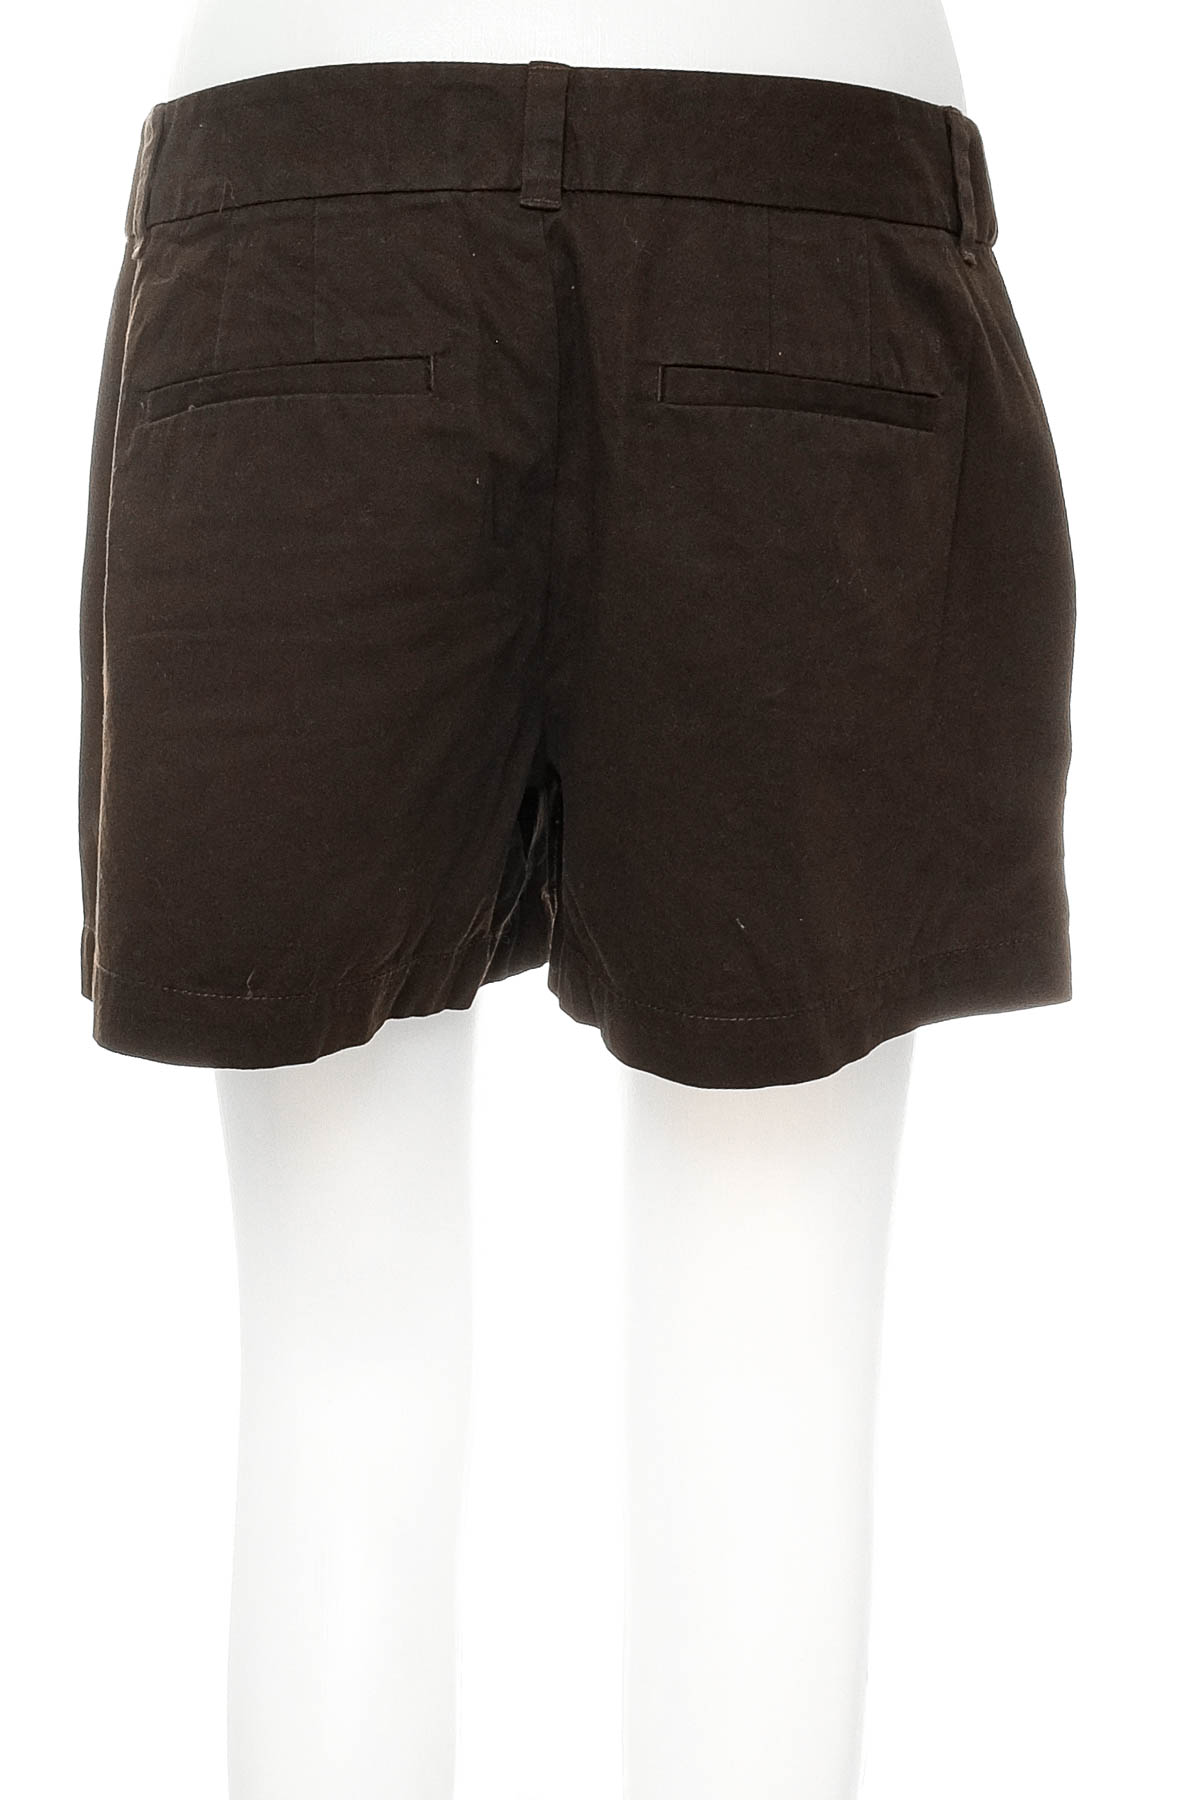 Female shorts - ANN TAYLOR LOFT - 1